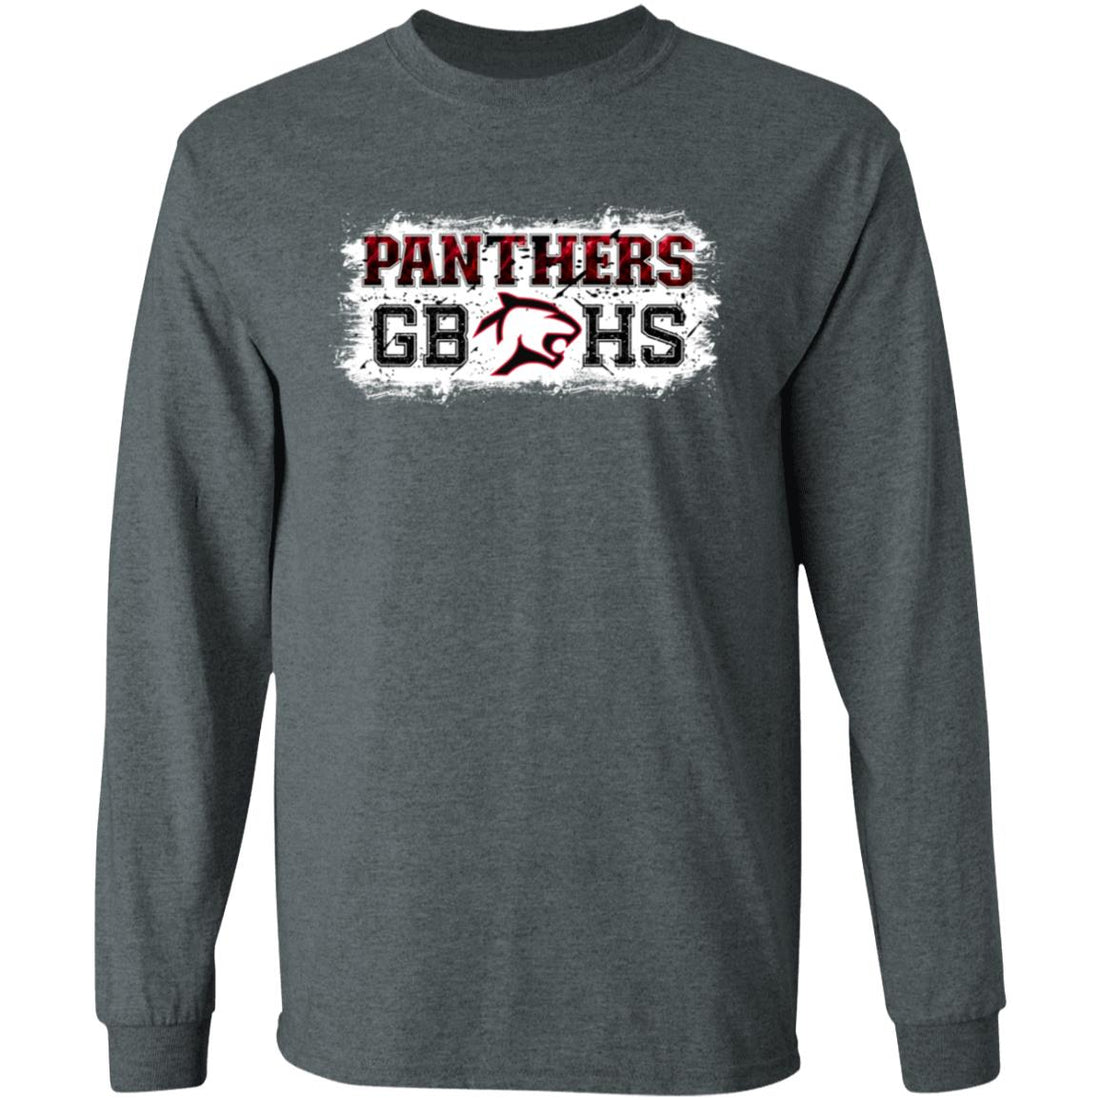 Panthers GBHS LS T-Shirt 5.3 oz. - T-Shirts - Positively Sassy - Panthers GBHS LS T-Shirt 5.3 oz.